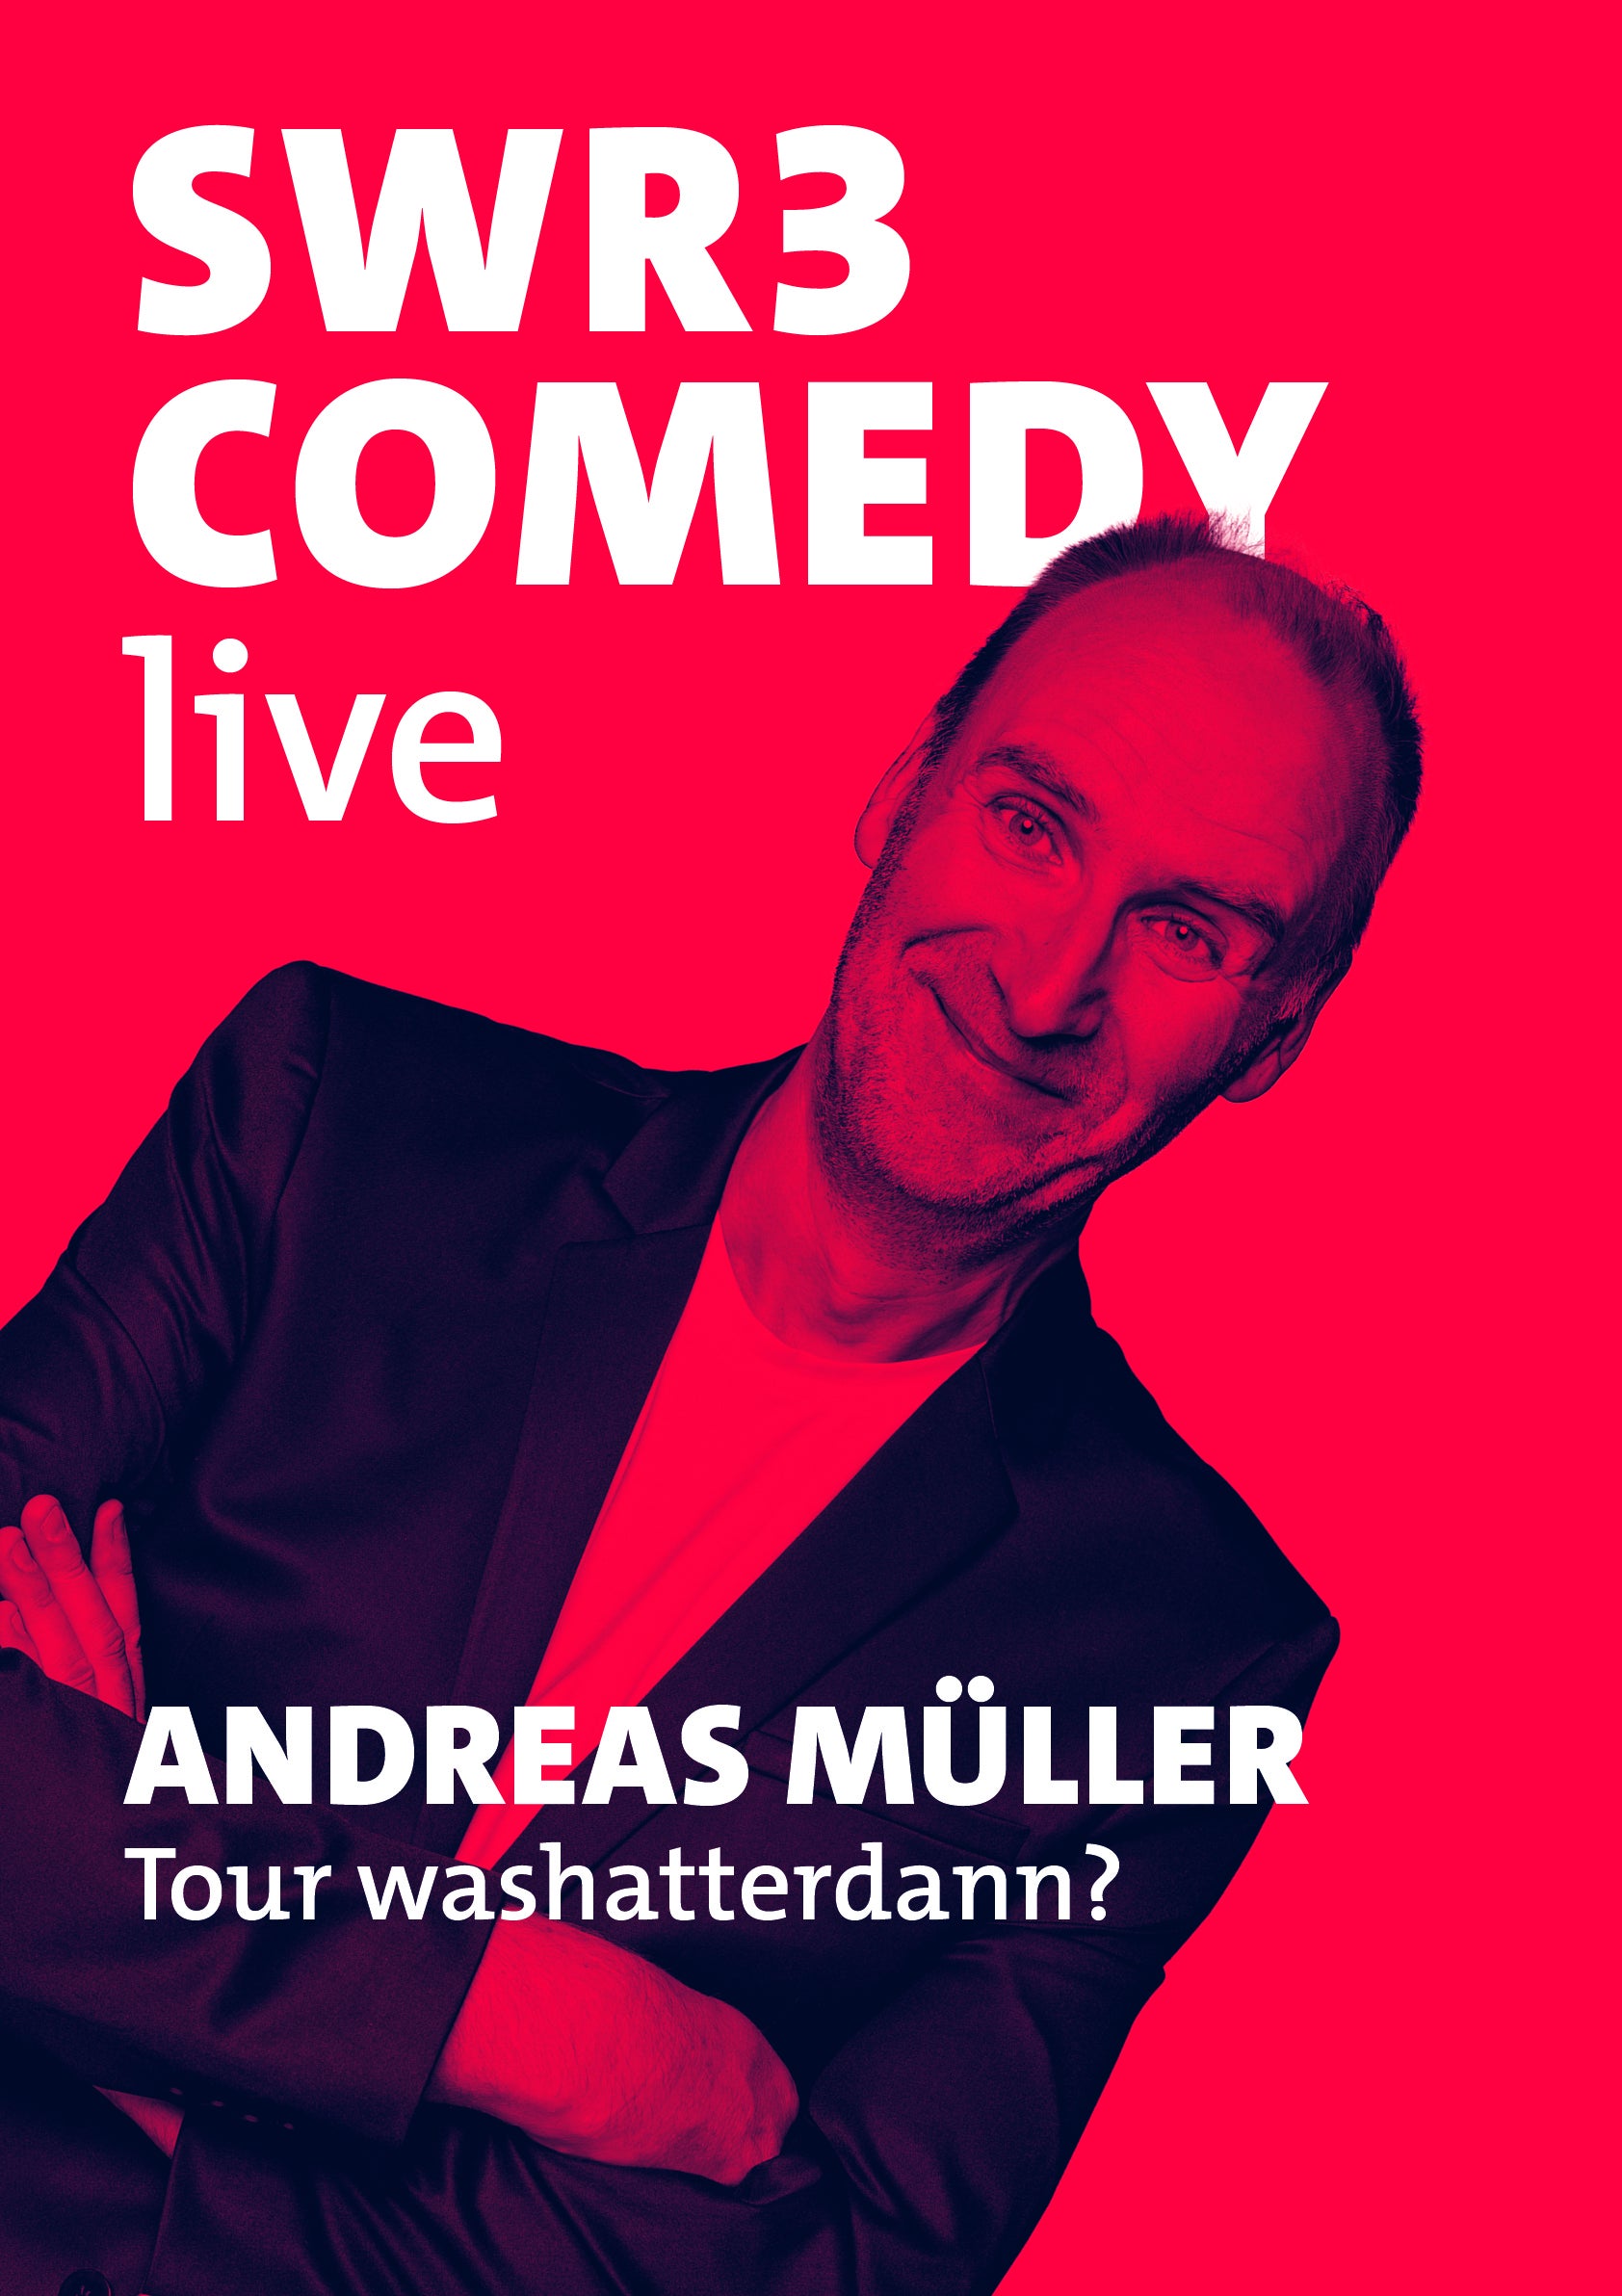 Andreas Müller "washatterdann?